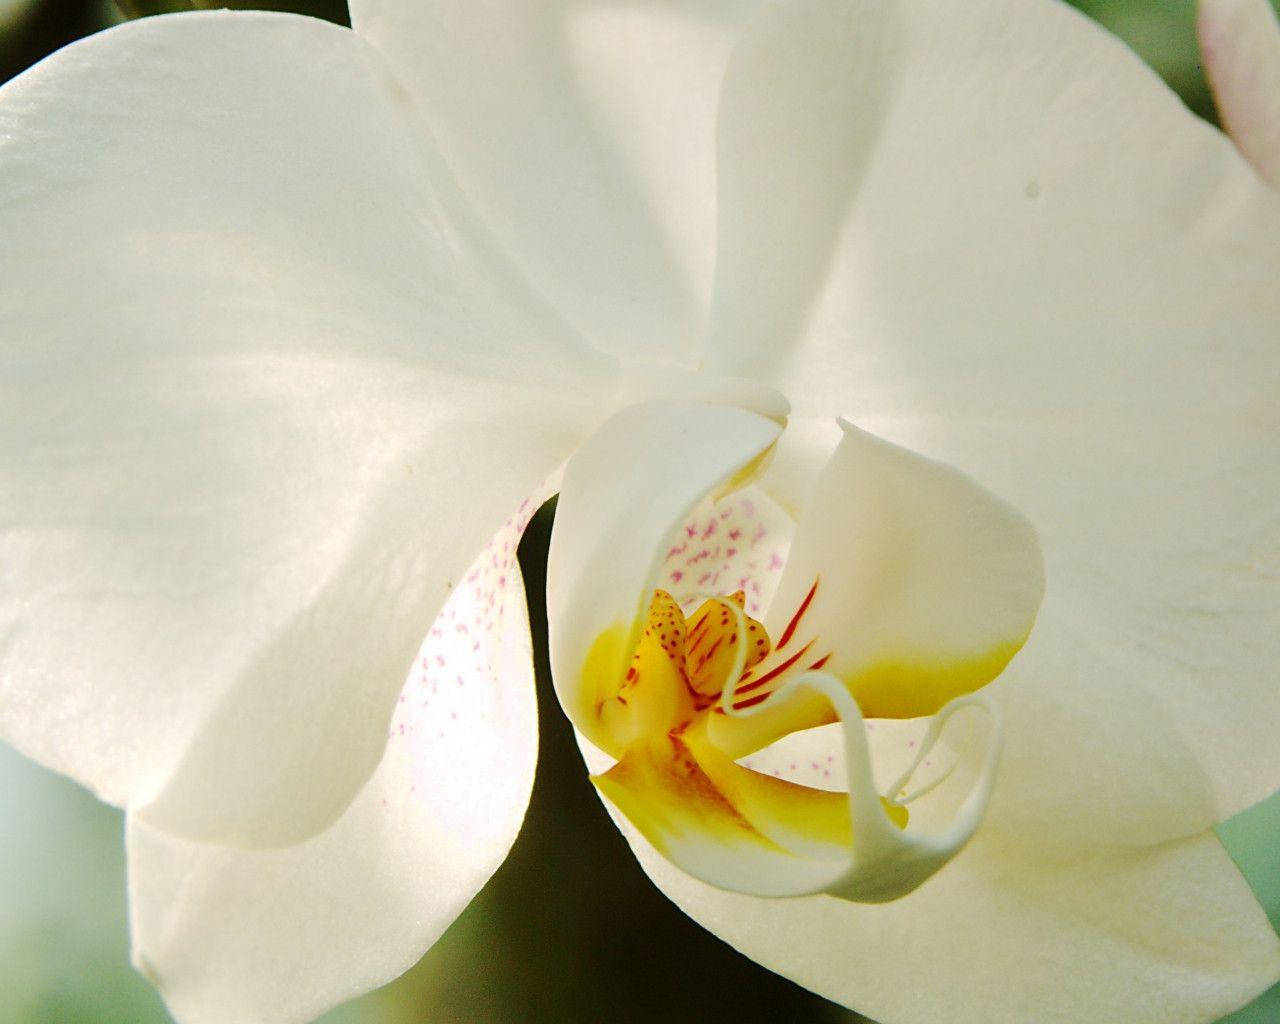 White Orchid Macro Photograph Wallpaper